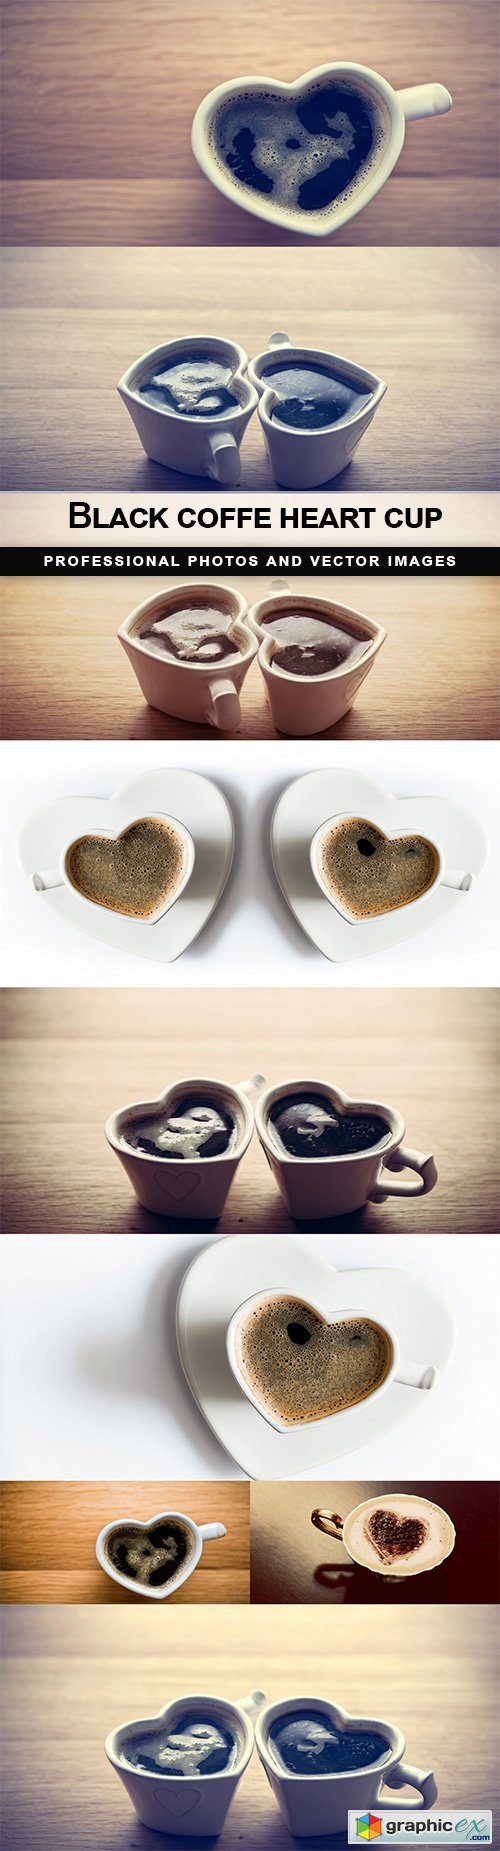 Black coffe heart cup